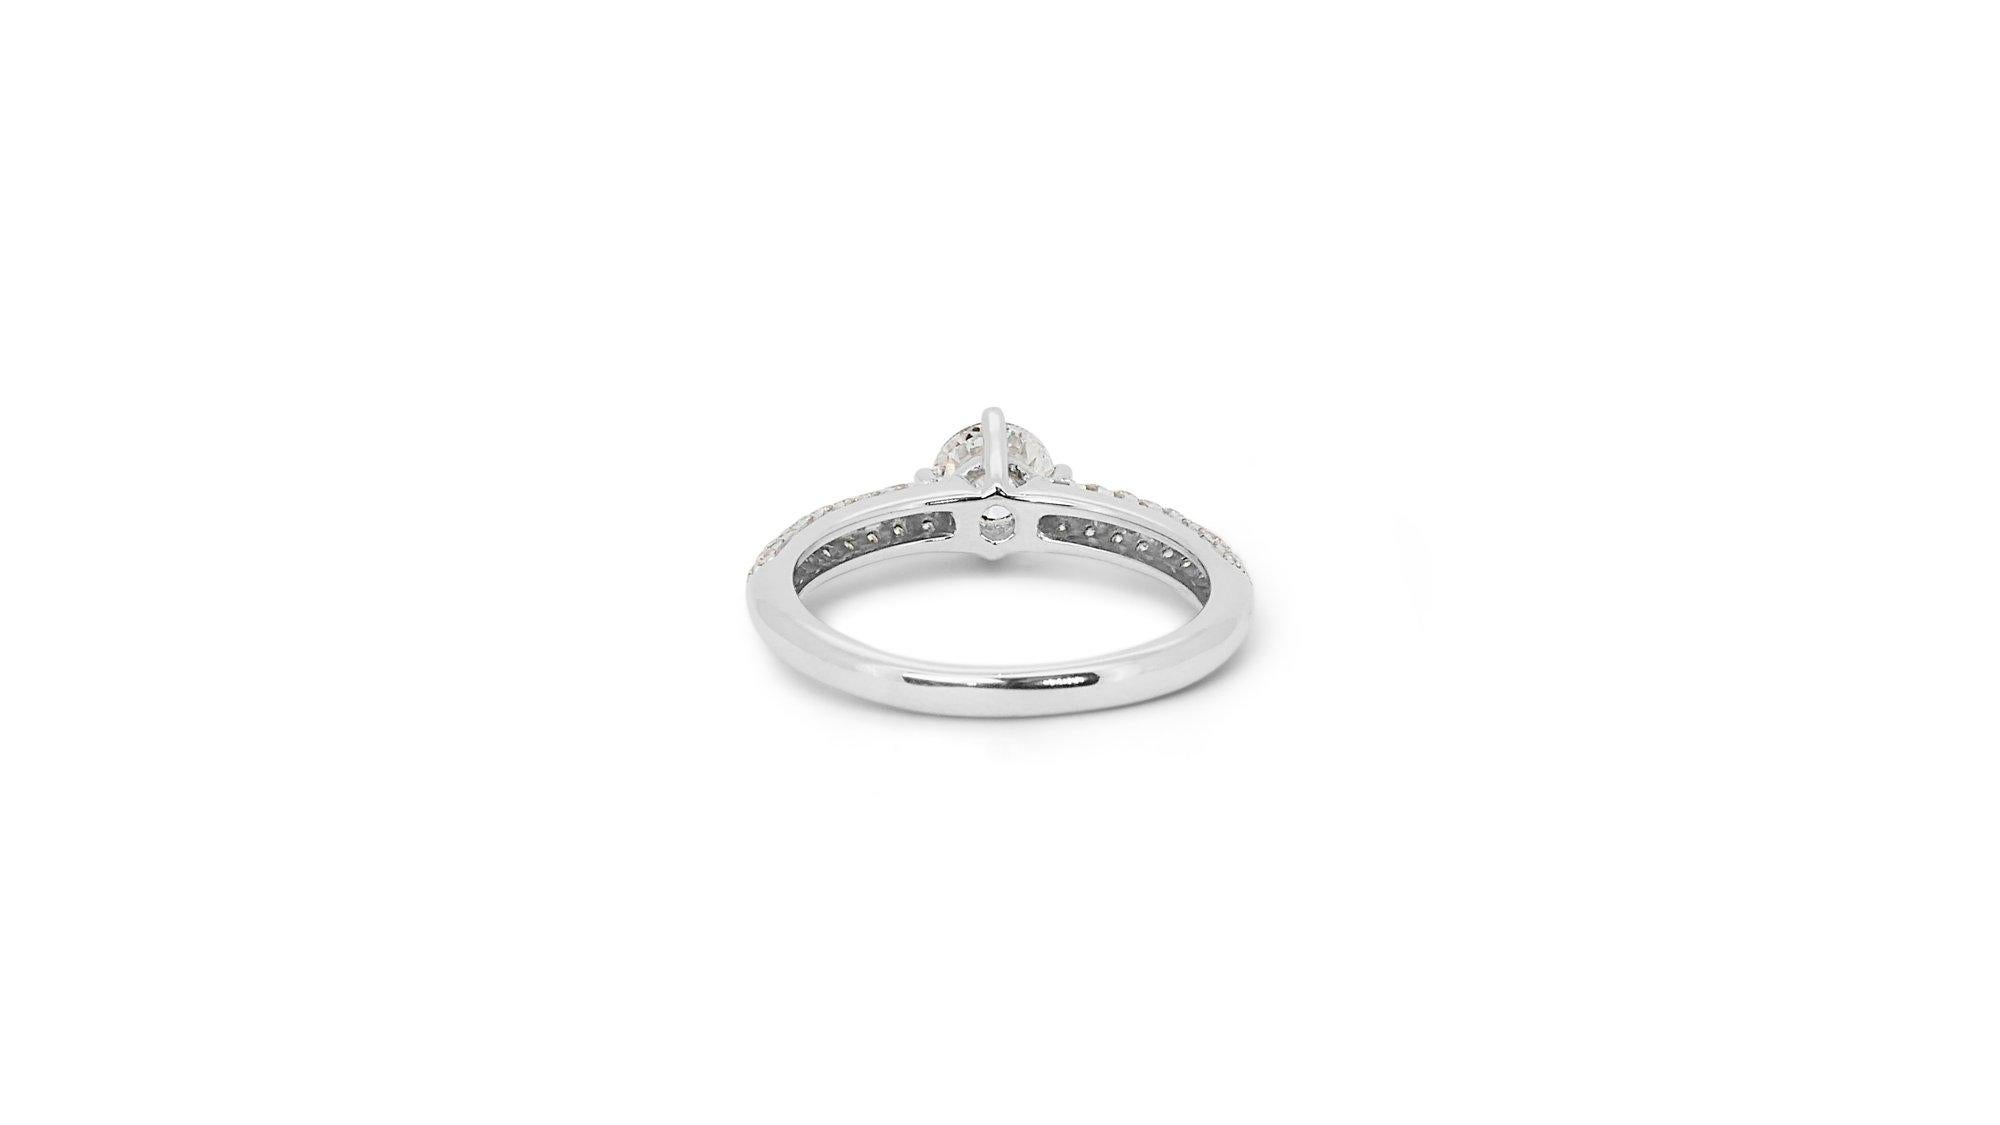 Sparkling 18k White Gold Engagement Ring with 0.90 ct Natural Diamonds IGI Cert 4